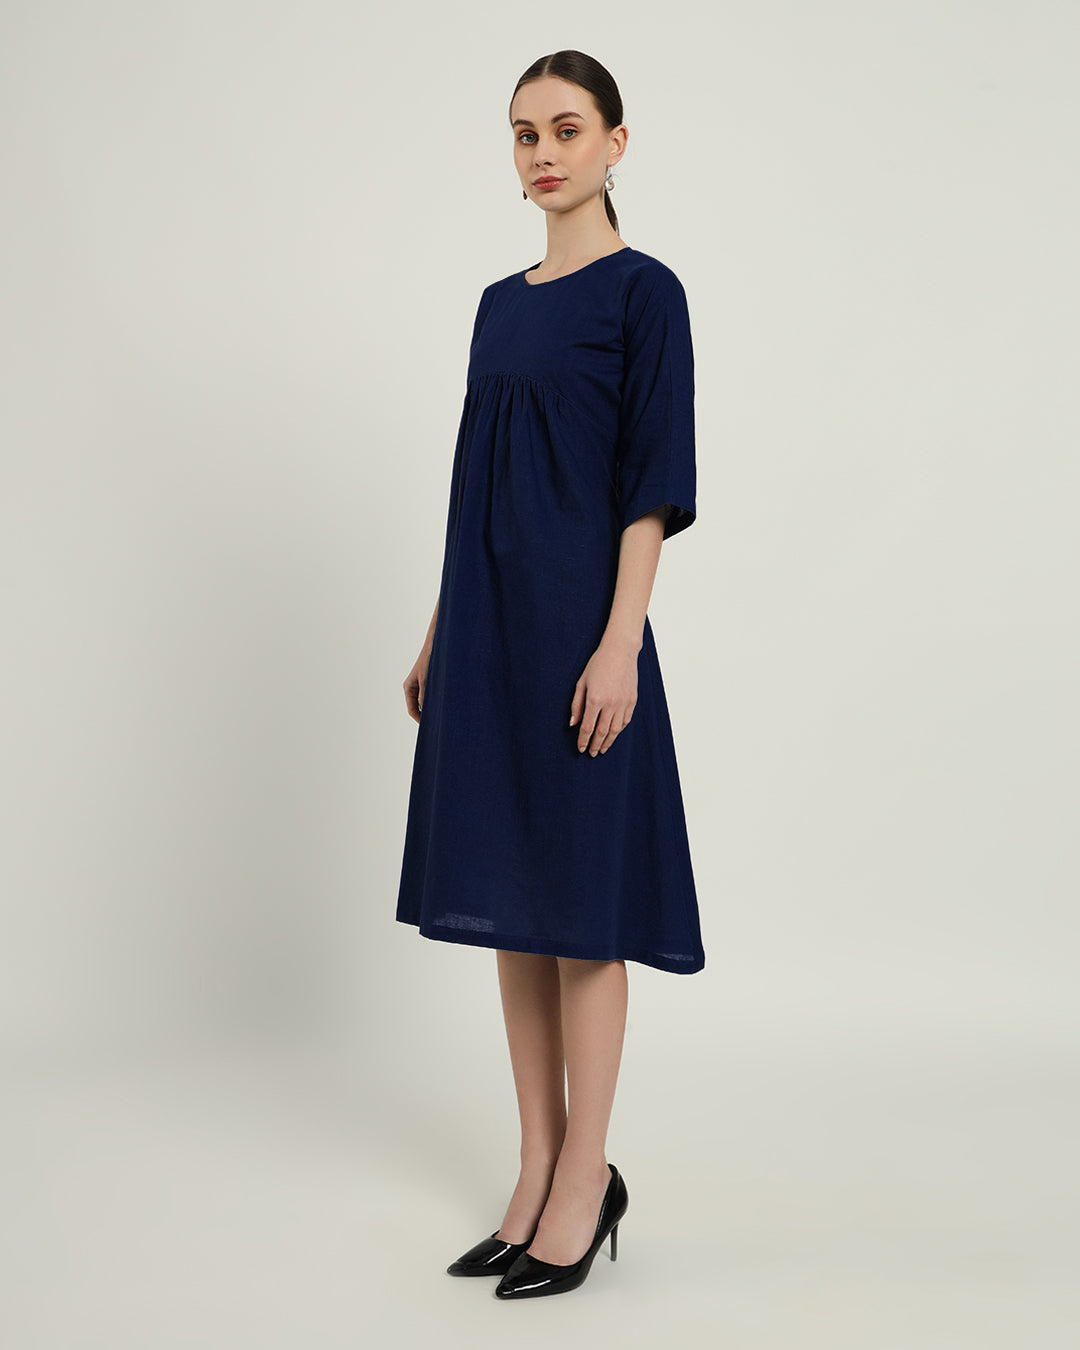 The Monrovia Daisy Midnight Blue Linen Dress